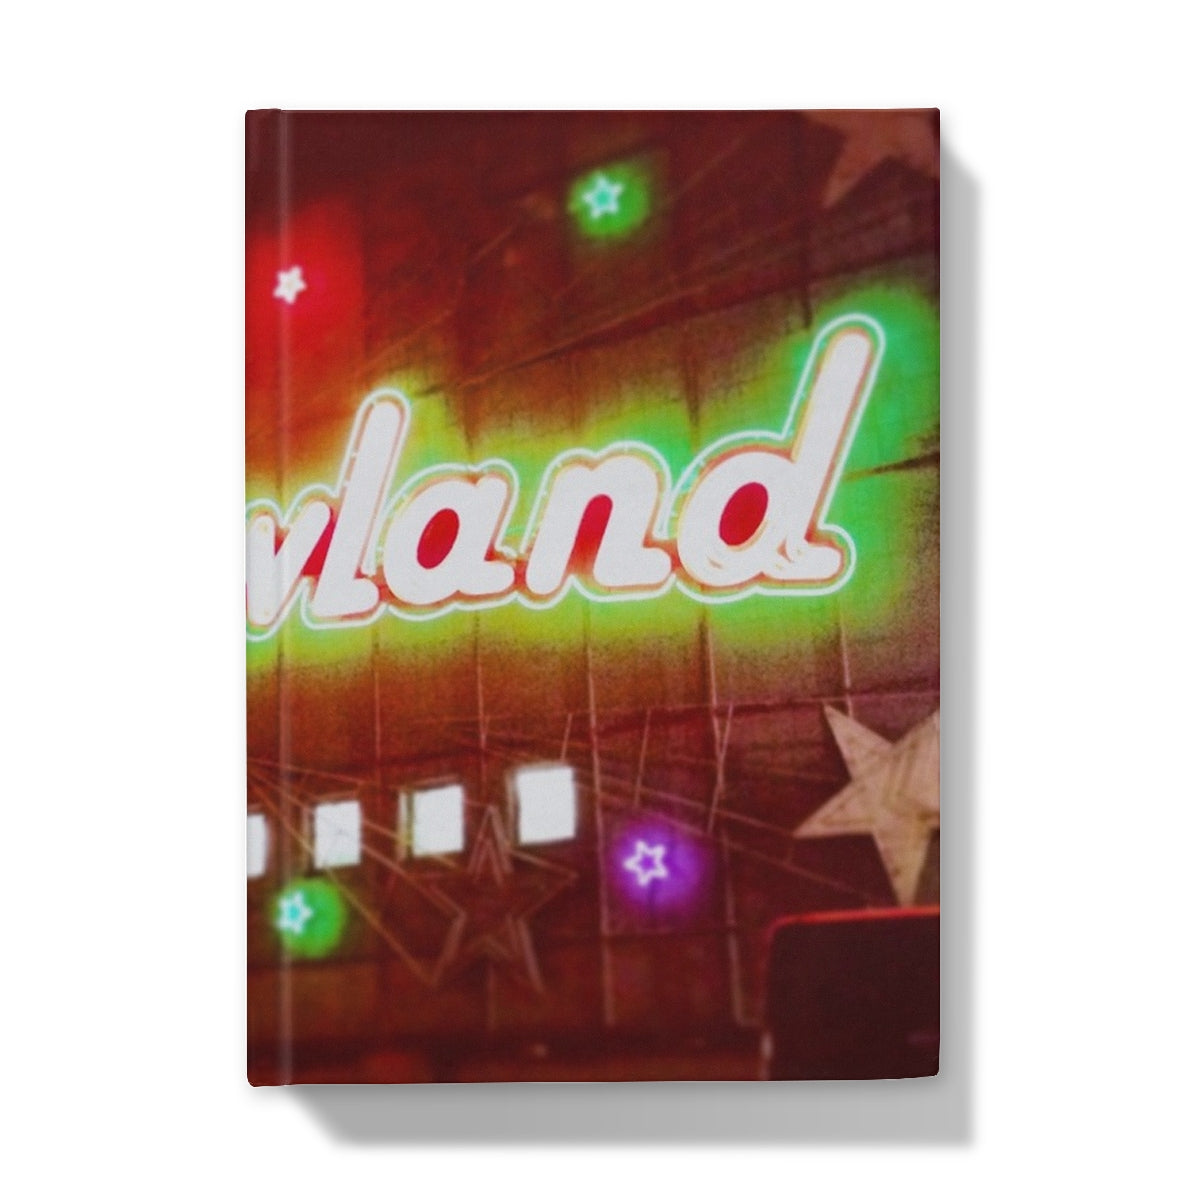 A Neon Glasgow Barrowlands Art Gifts Hardback Journal-Journals & Notebooks-Edinburgh & Glasgow Art Gallery-5"x7"-Lined-Paintings, Prints, Homeware, Art Gifts From Scotland By Scottish Artist Kevin Hunter